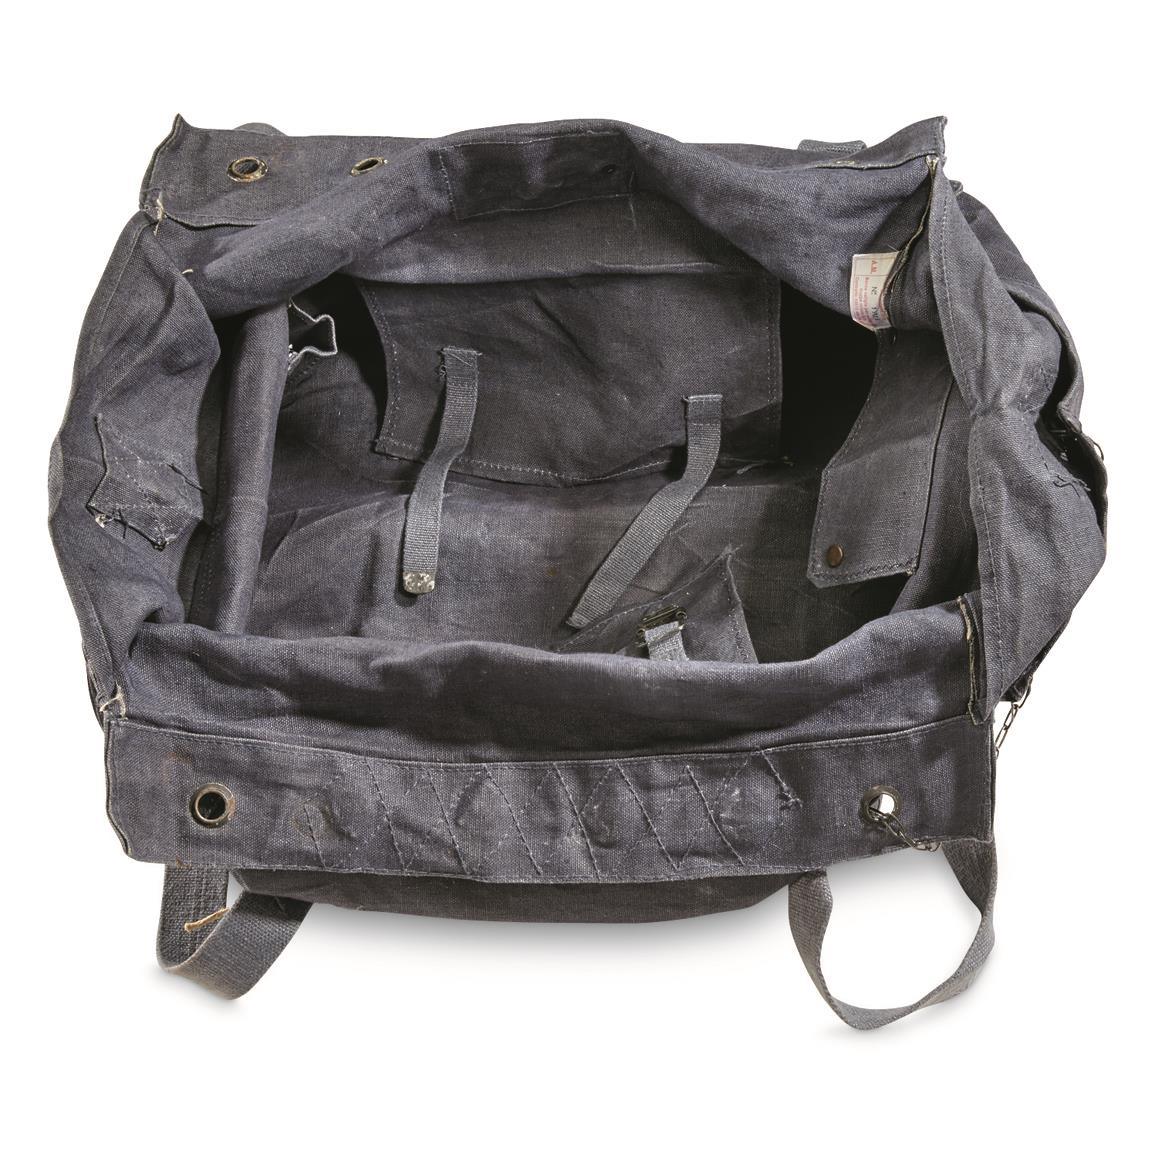 Handle Large Bag Tactical Duffle Bag Range Bag